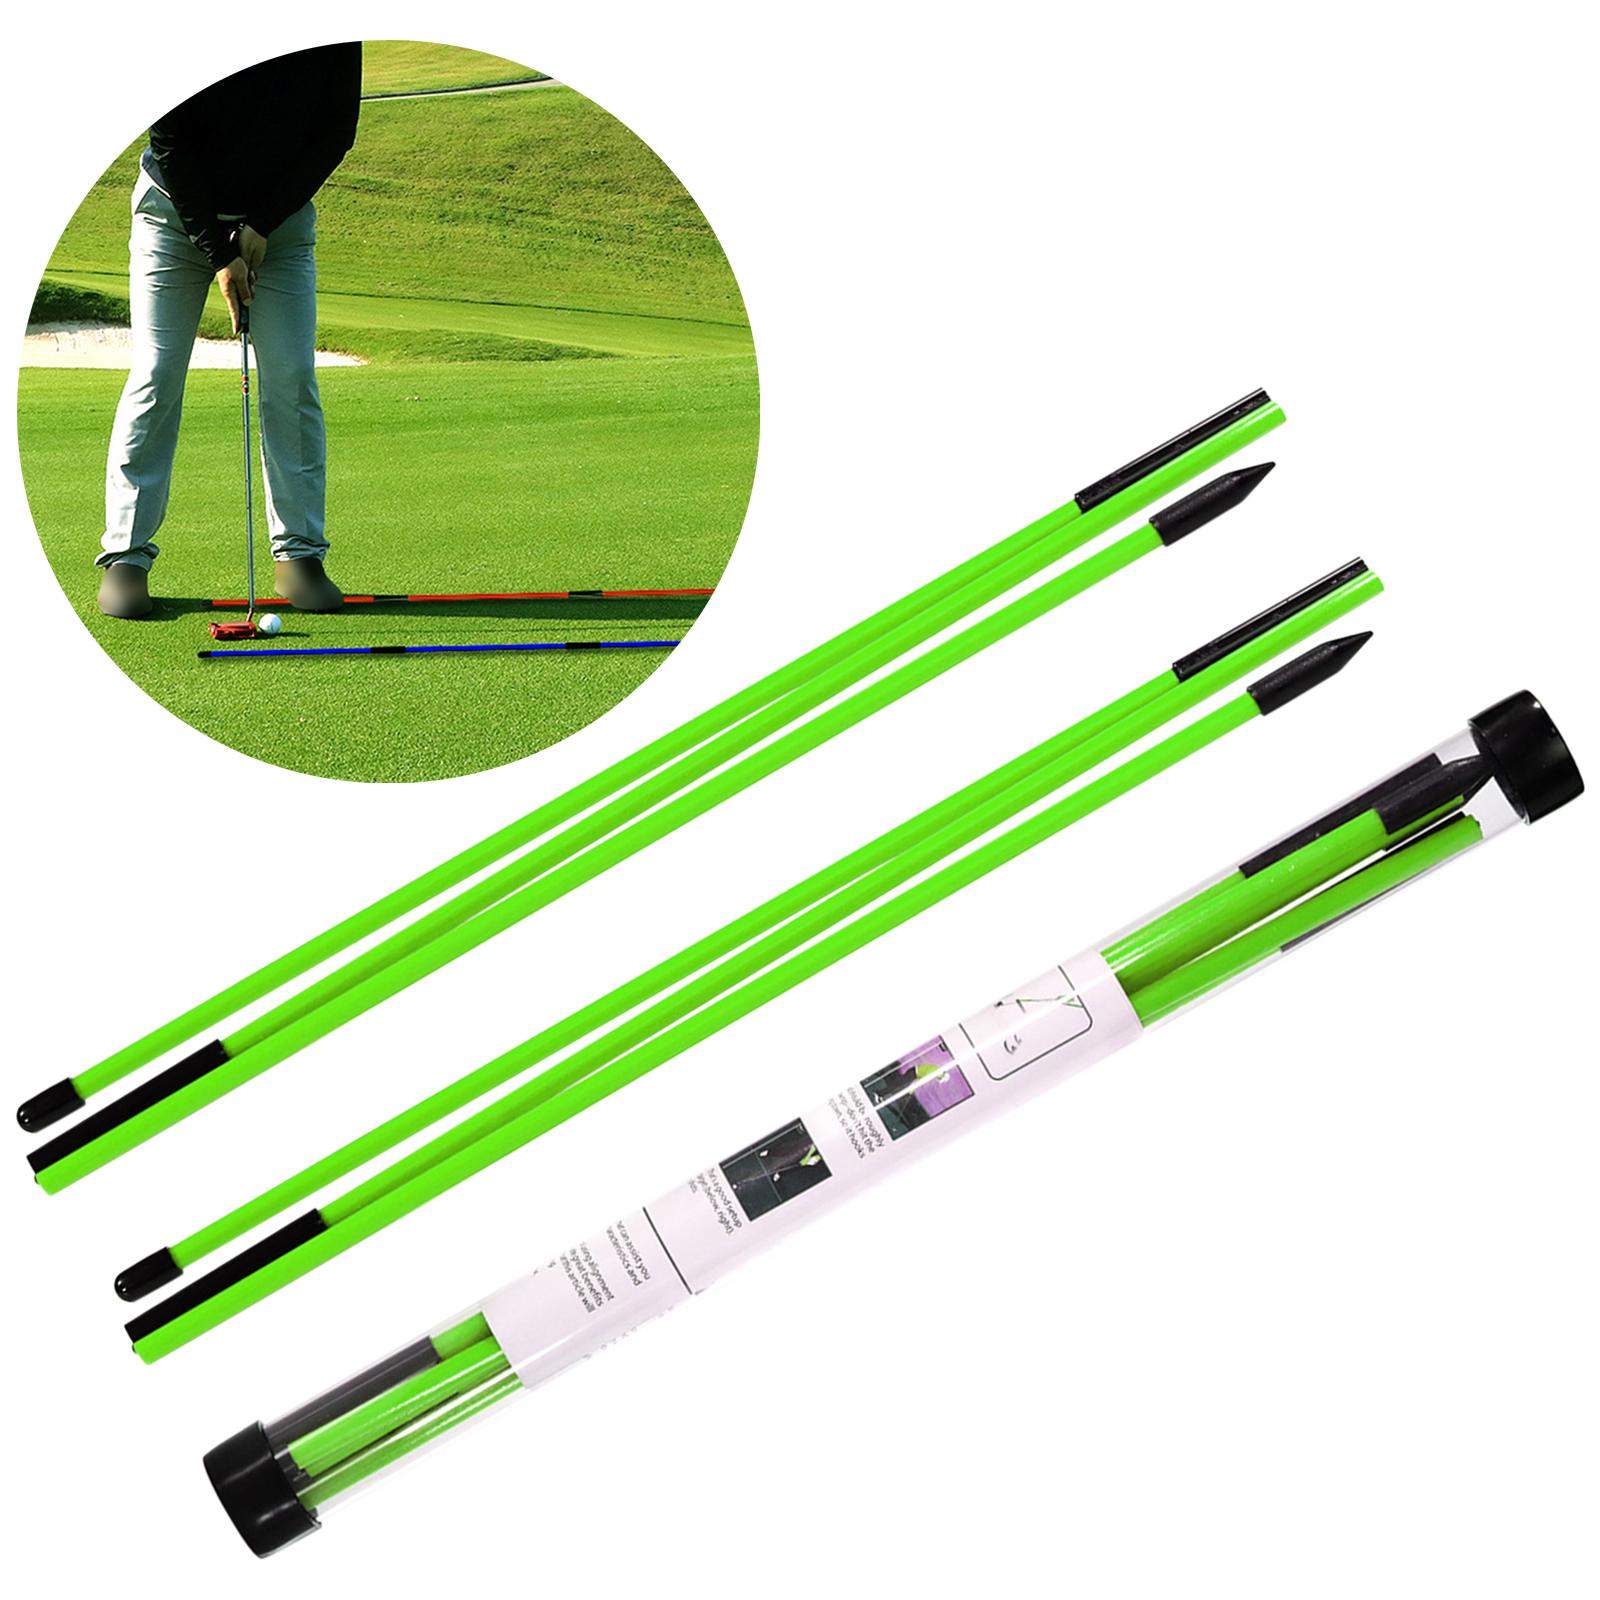 2Pack Golf Alignment Rods Golf Swing Trainer Sticks Golf Training Equipment Green